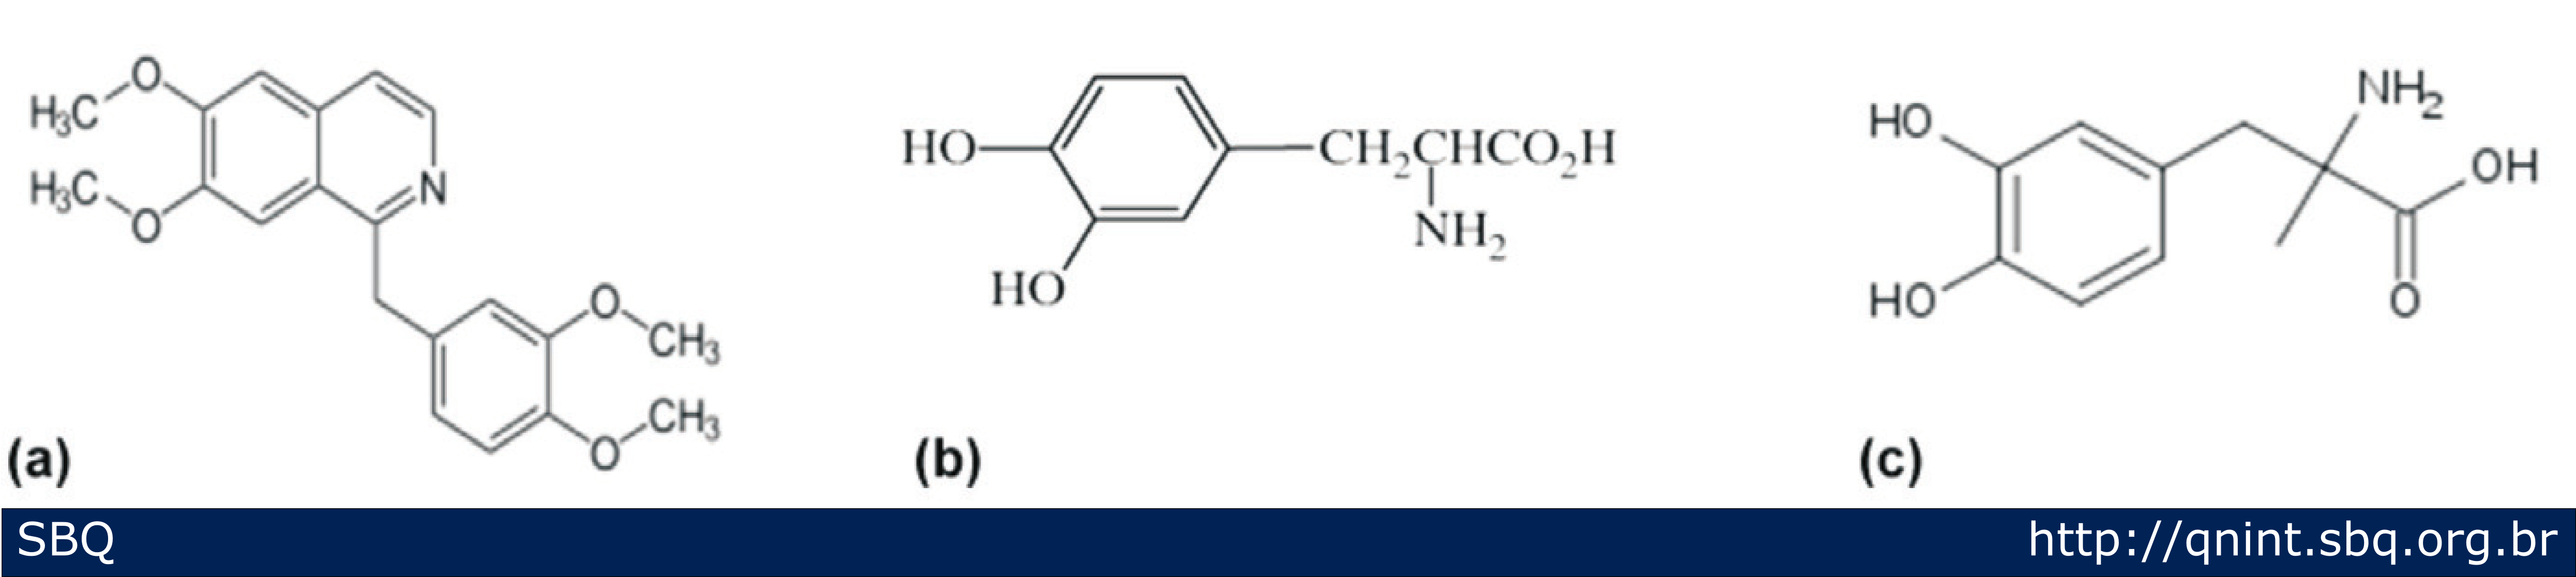 Figura 3: (a) Estrutura química da papaverina, (b) estrutura química da L-dopa e (c) estrutura química da L-metildopa. 